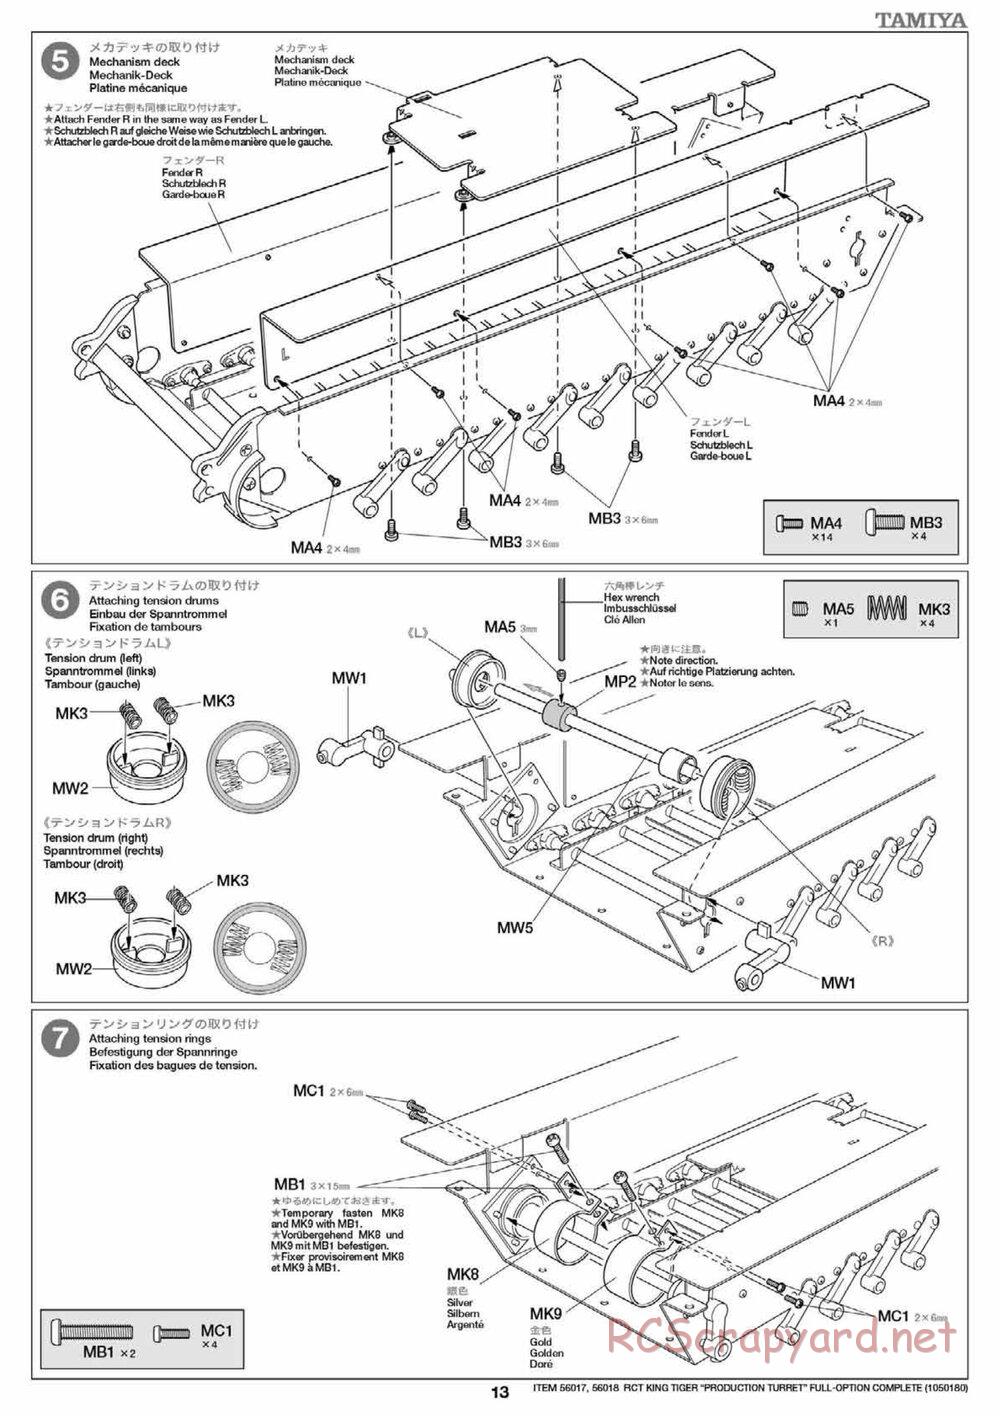 Tamiya - King Tiger - 1/16 Scale Chassis - Manual - Page 13